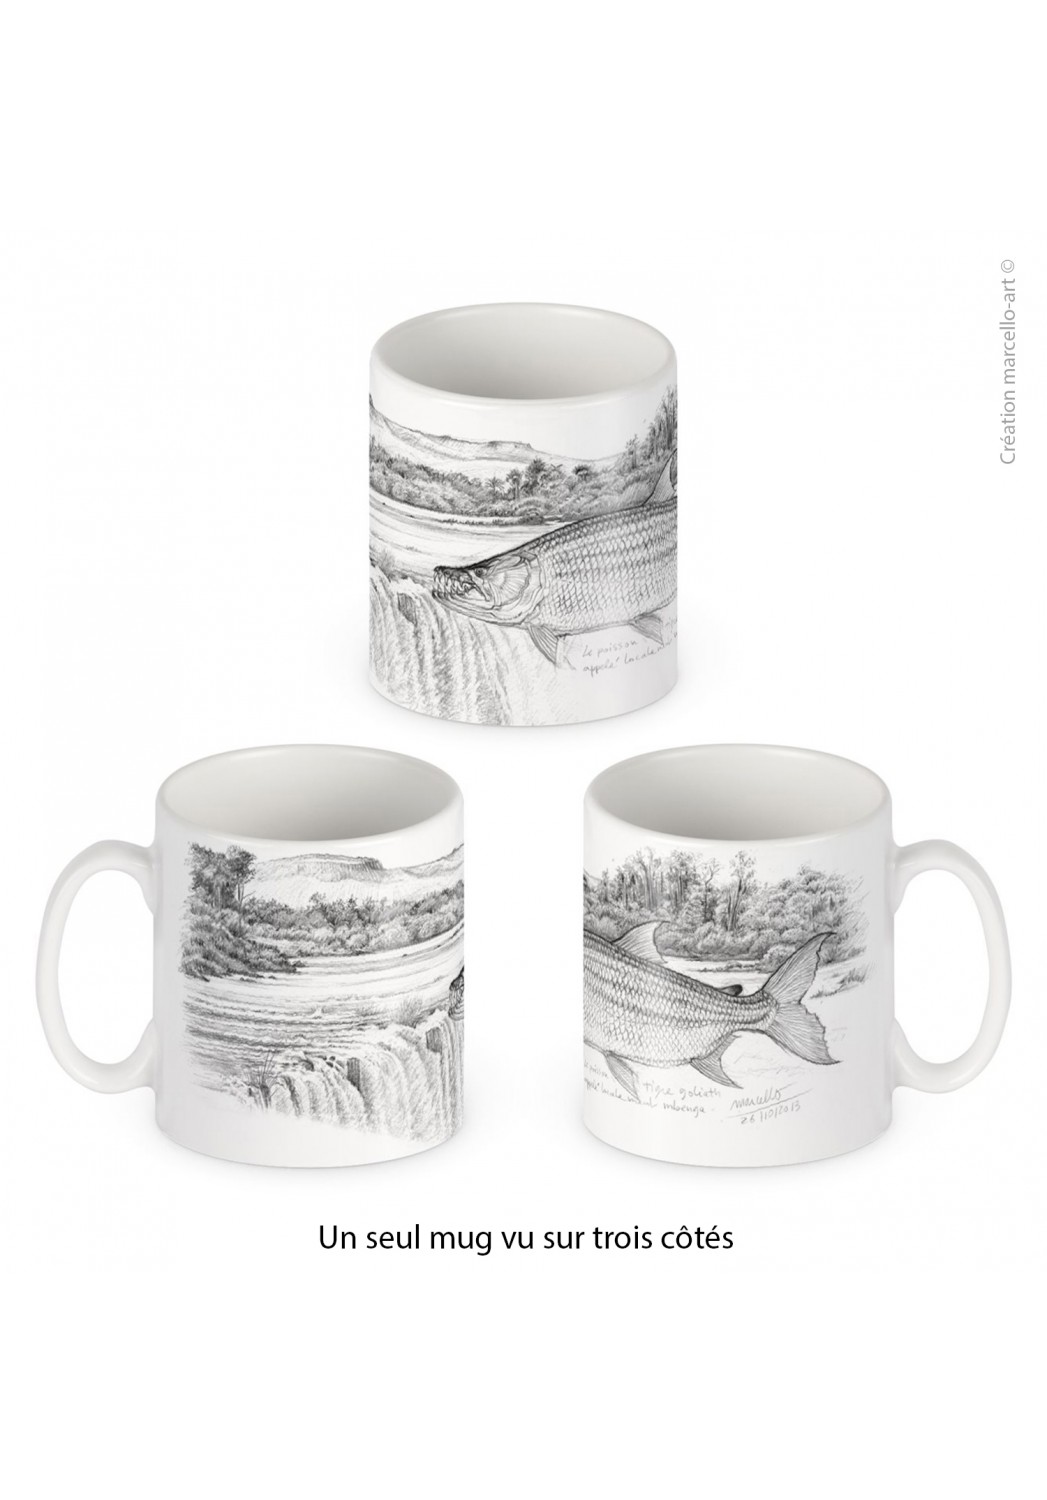 Marcello-art: Decoration accessoiries Porcelain mug 242 fish tiger